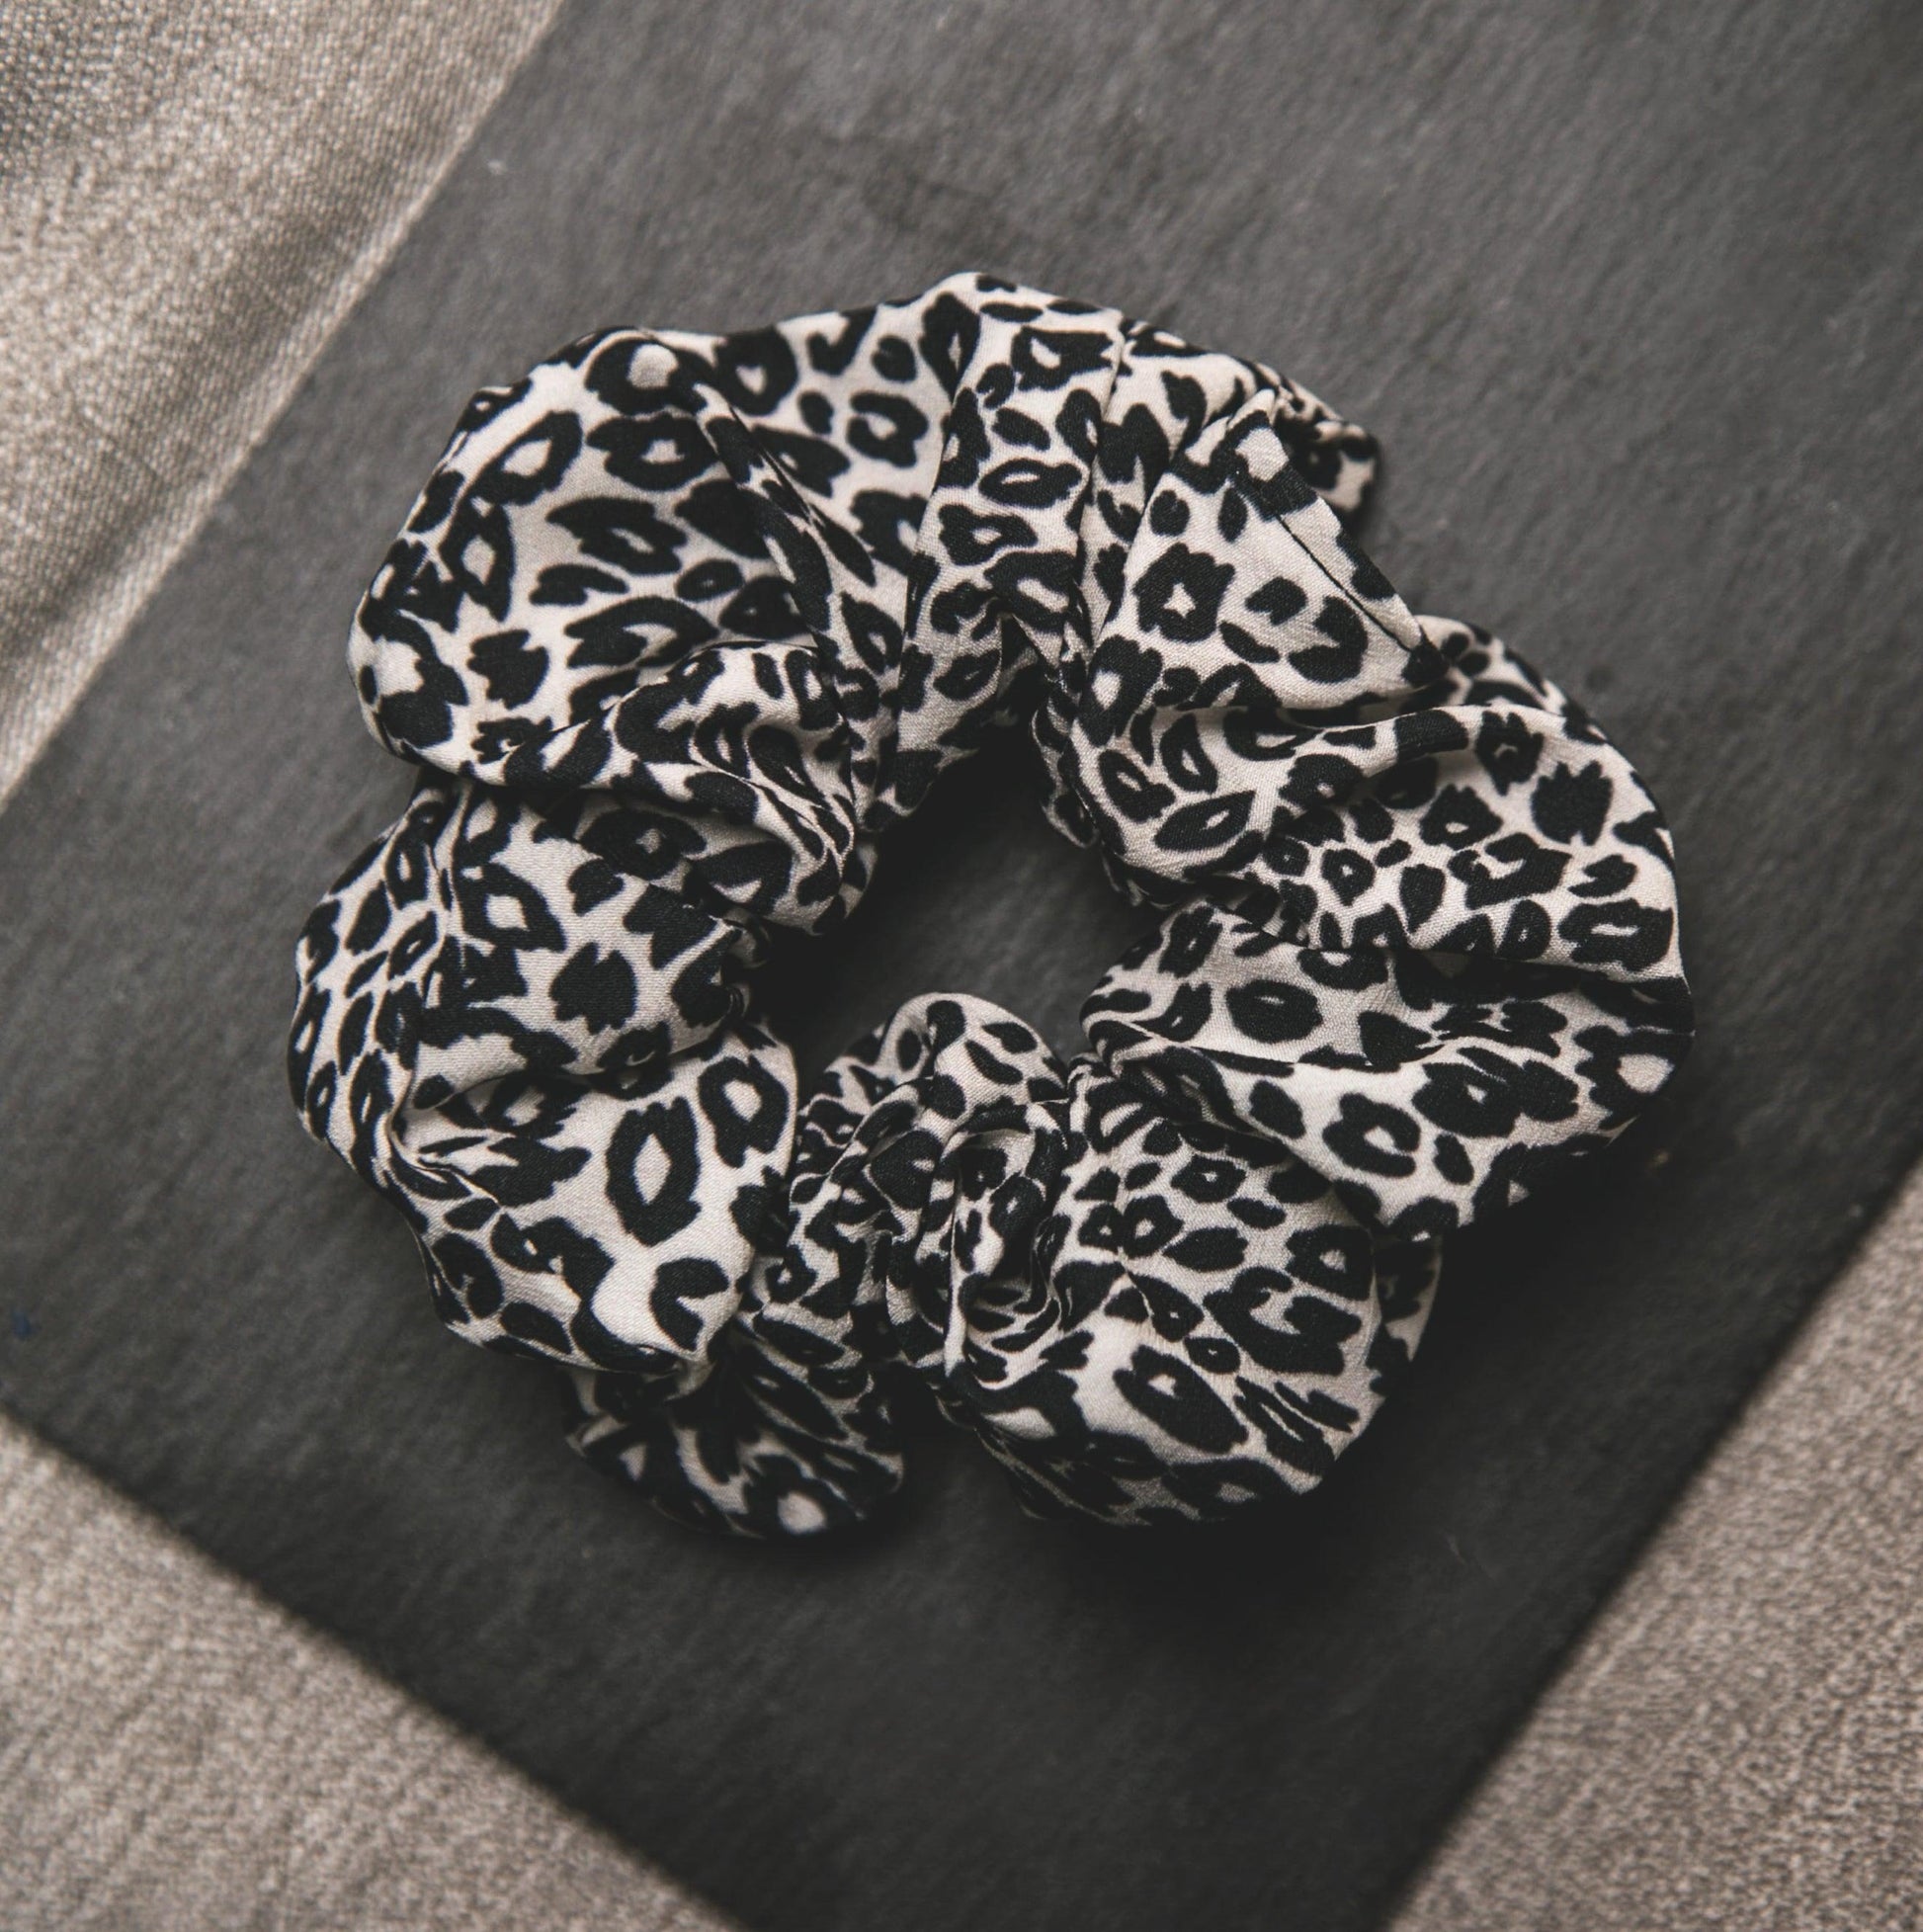 Behati Leopard Print Scrunchie - White - Luna Charles | animal, hair accessories, leopard, scrunchie, white | 